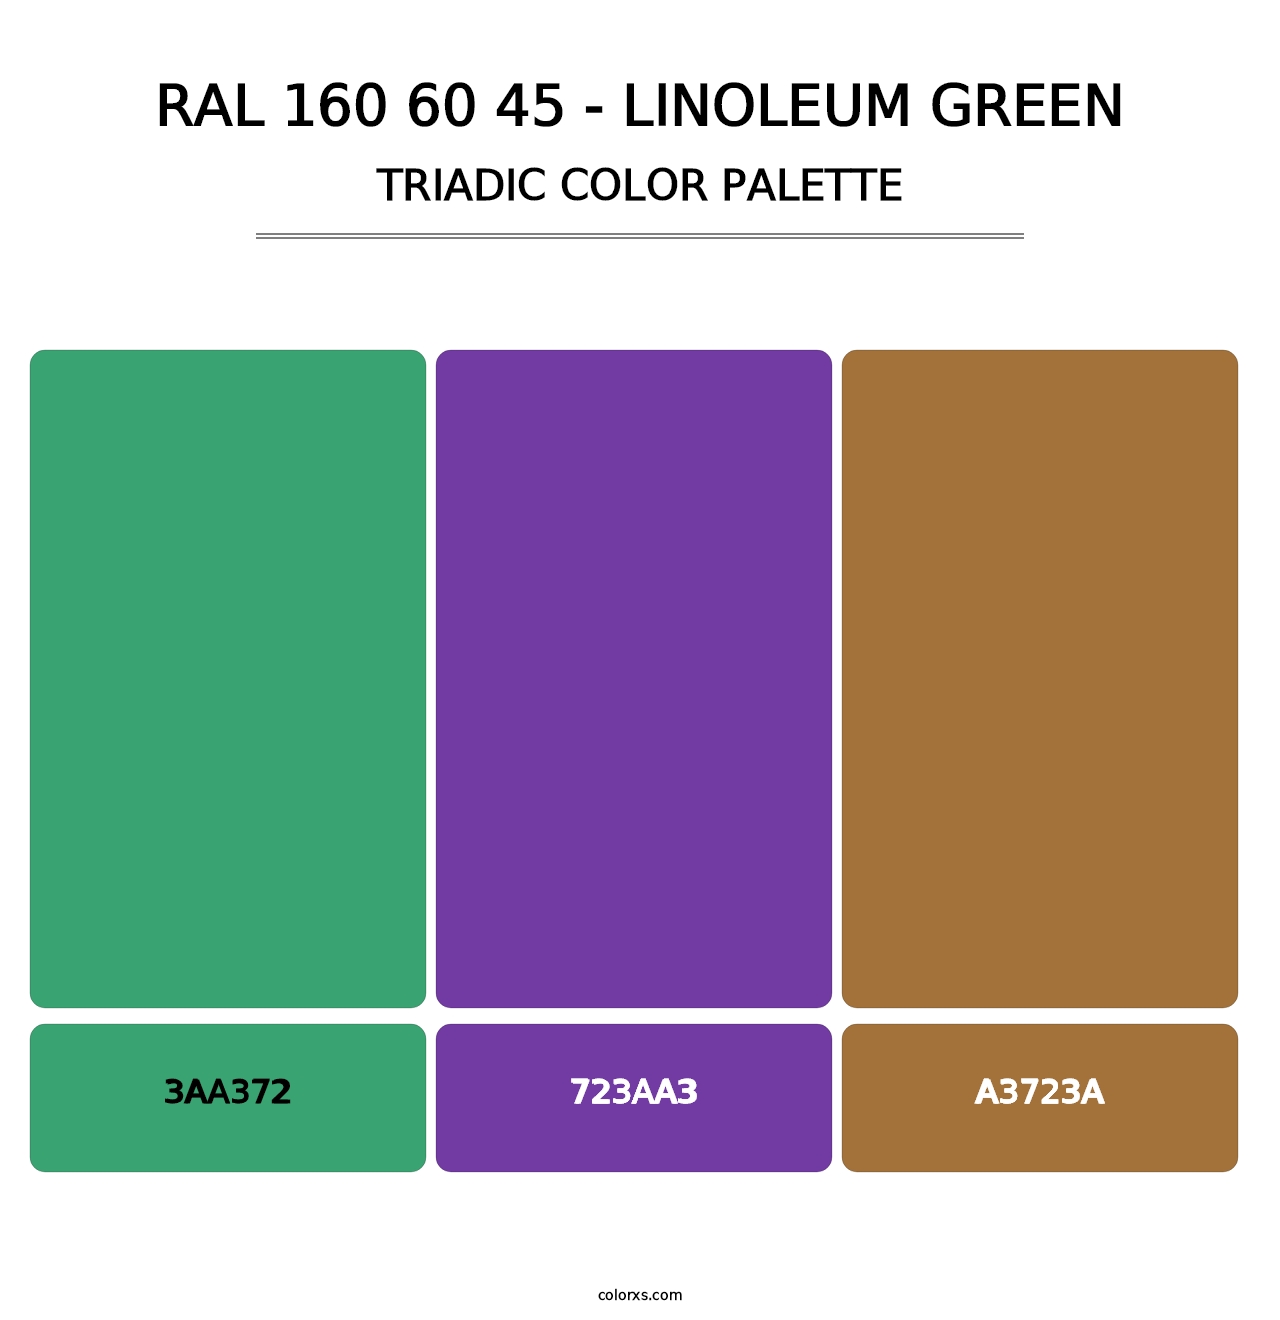 RAL 160 60 45 - Linoleum Green - Triadic Color Palette